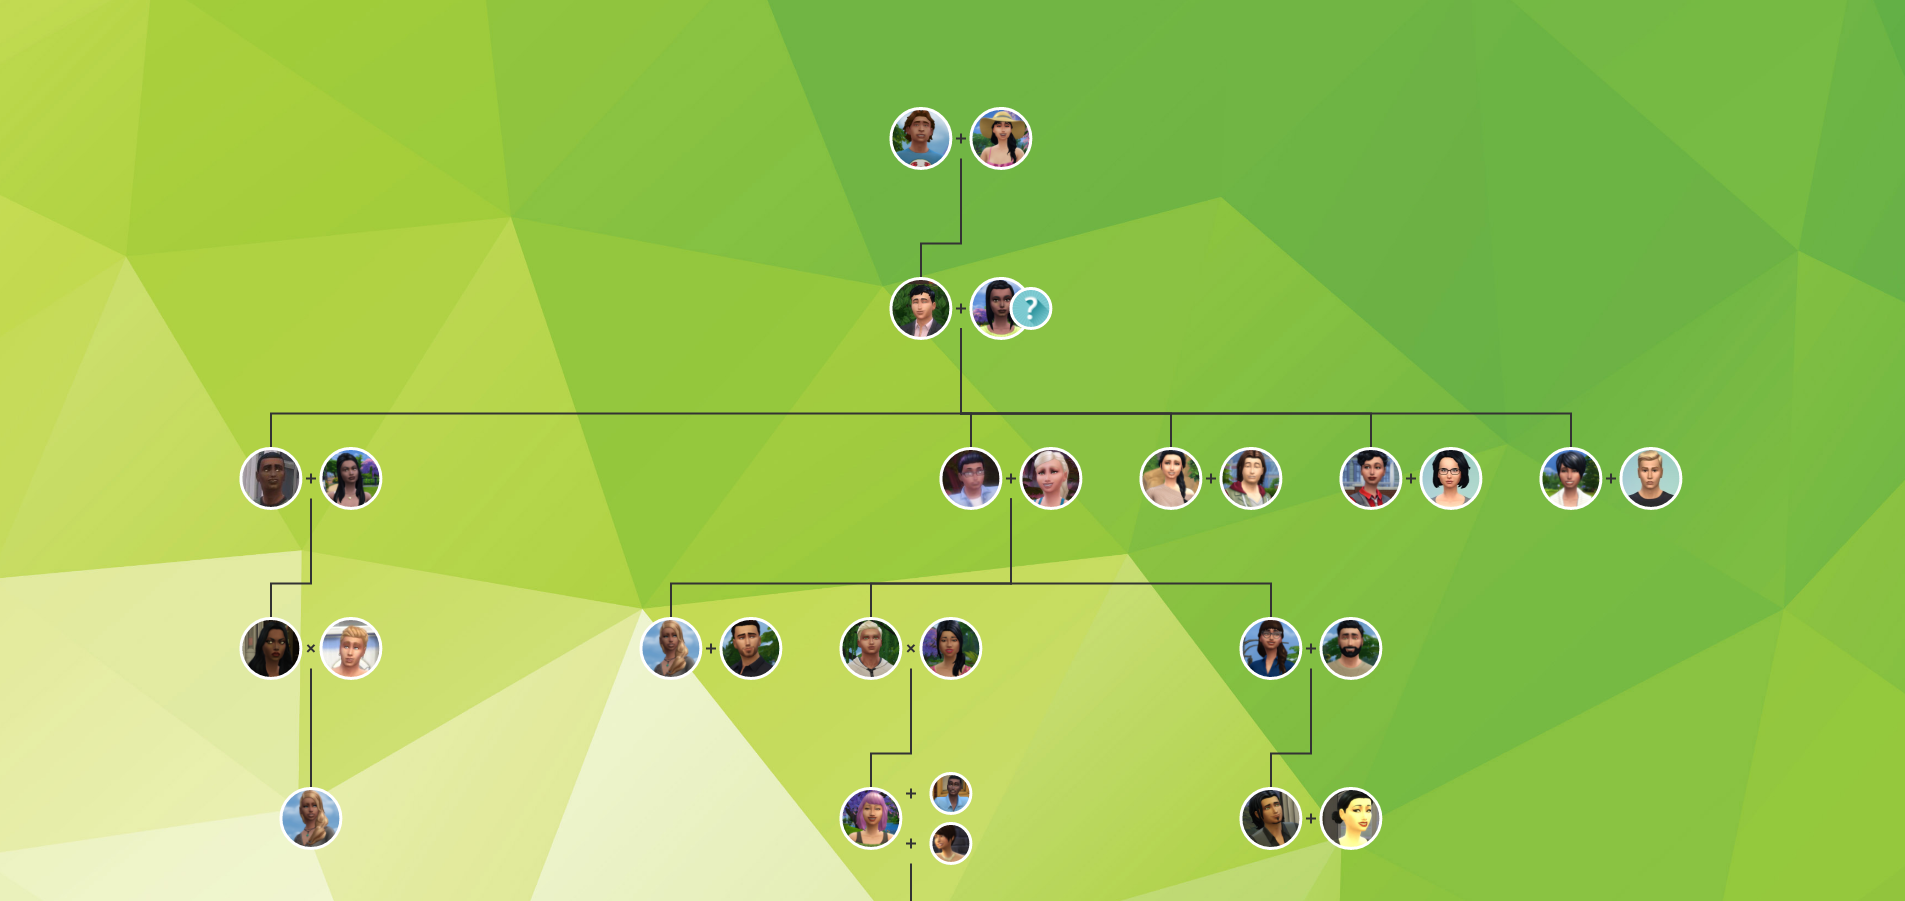 sims 4 legacy family tree